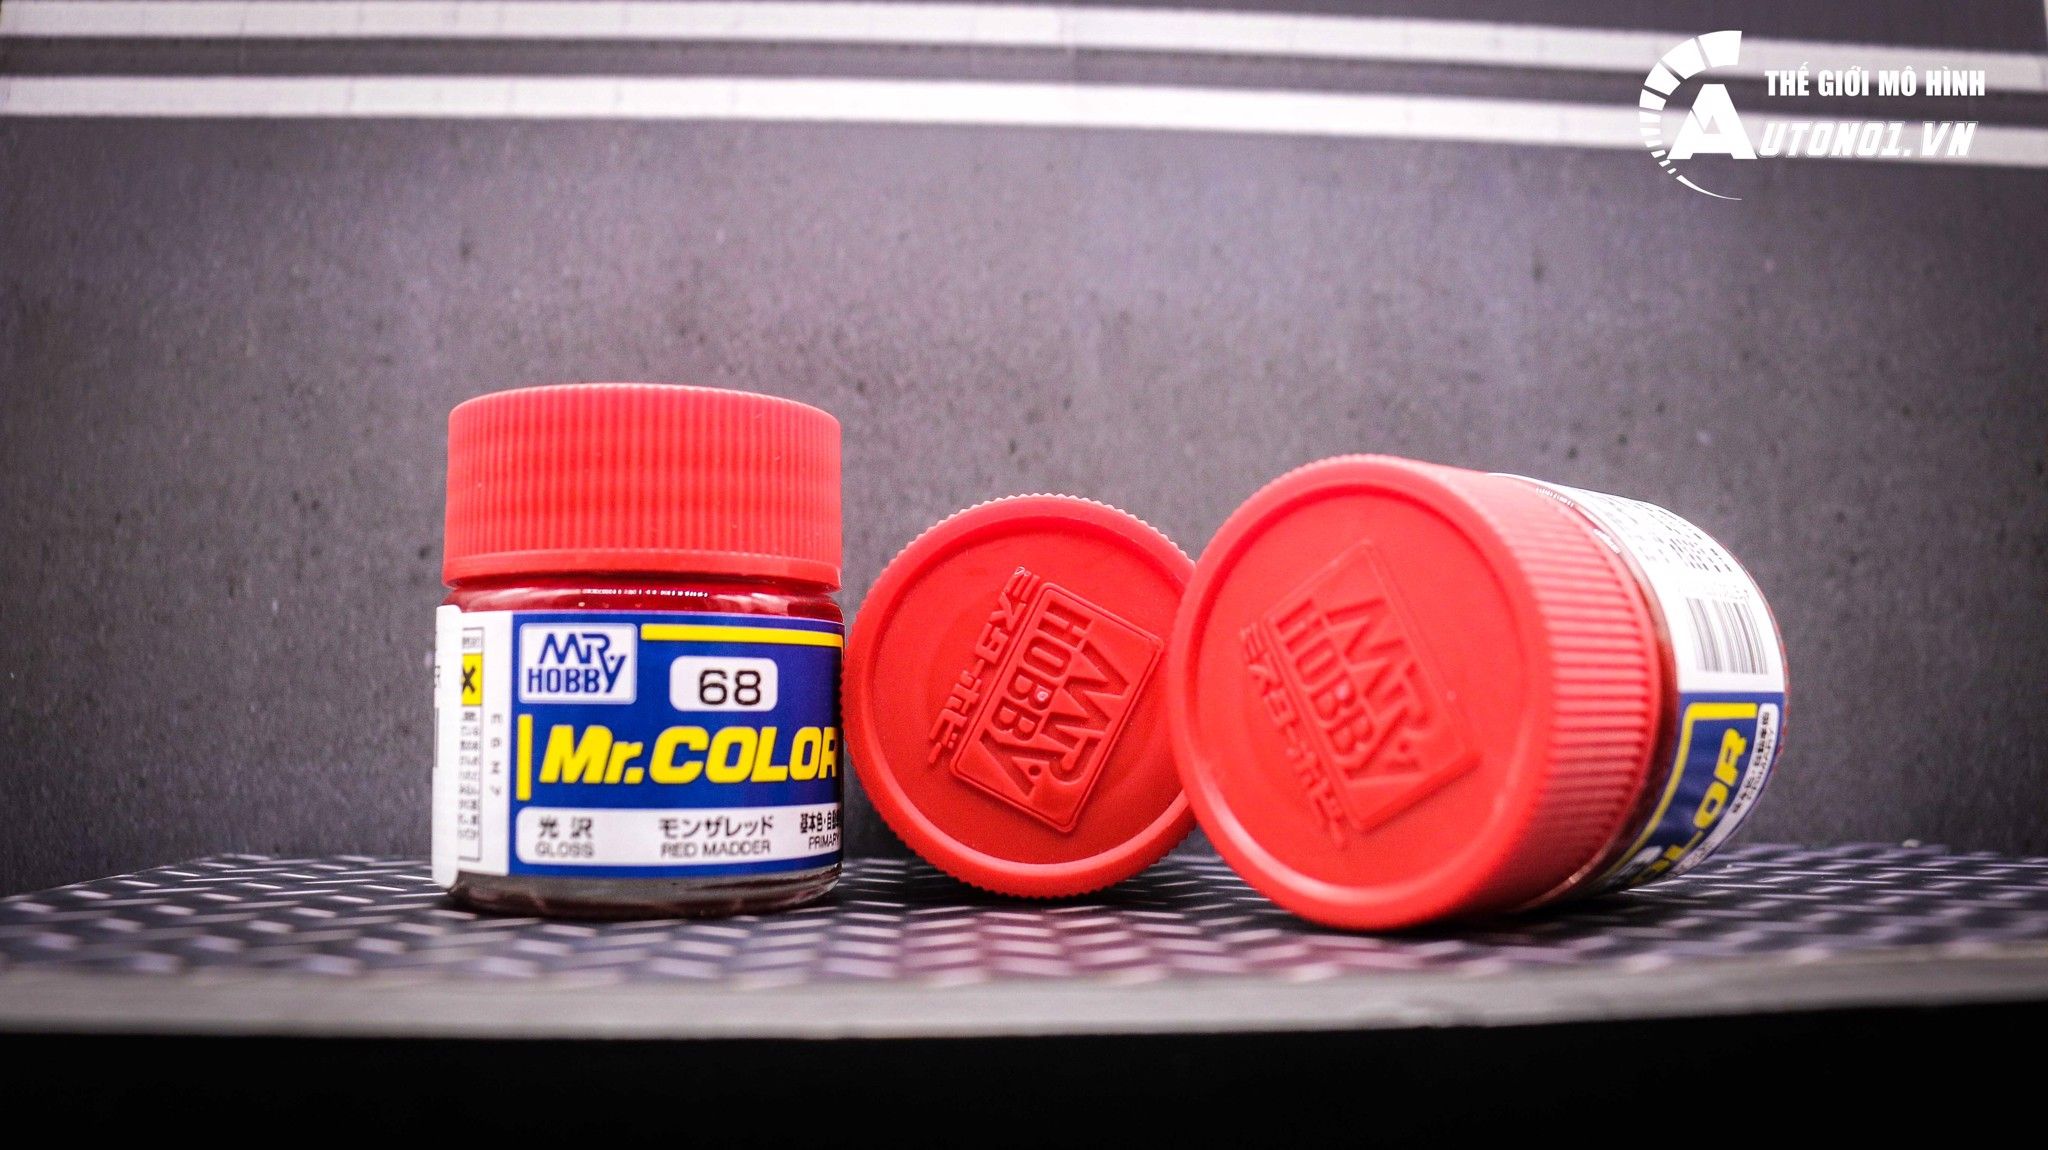 C68 Mr. Color Gloss Red Madder 10ml